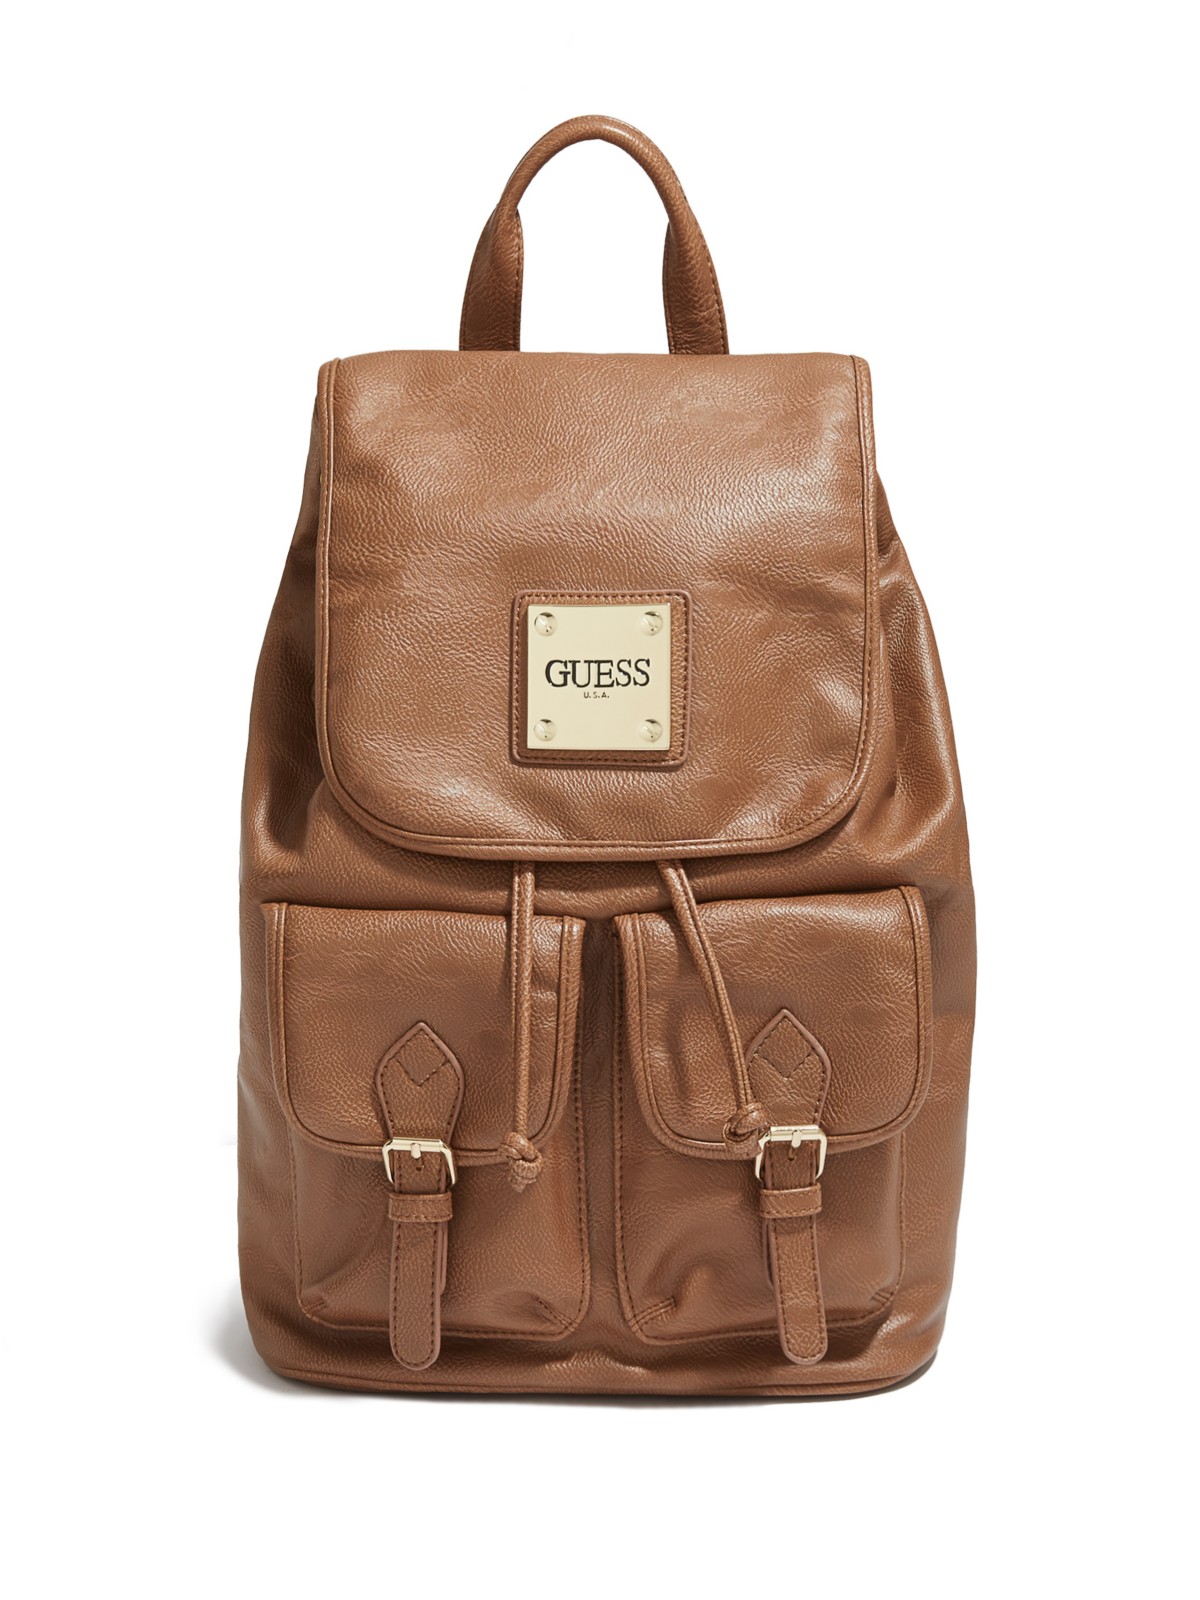 GUESS Jessica Drawstring Backpack | eBay